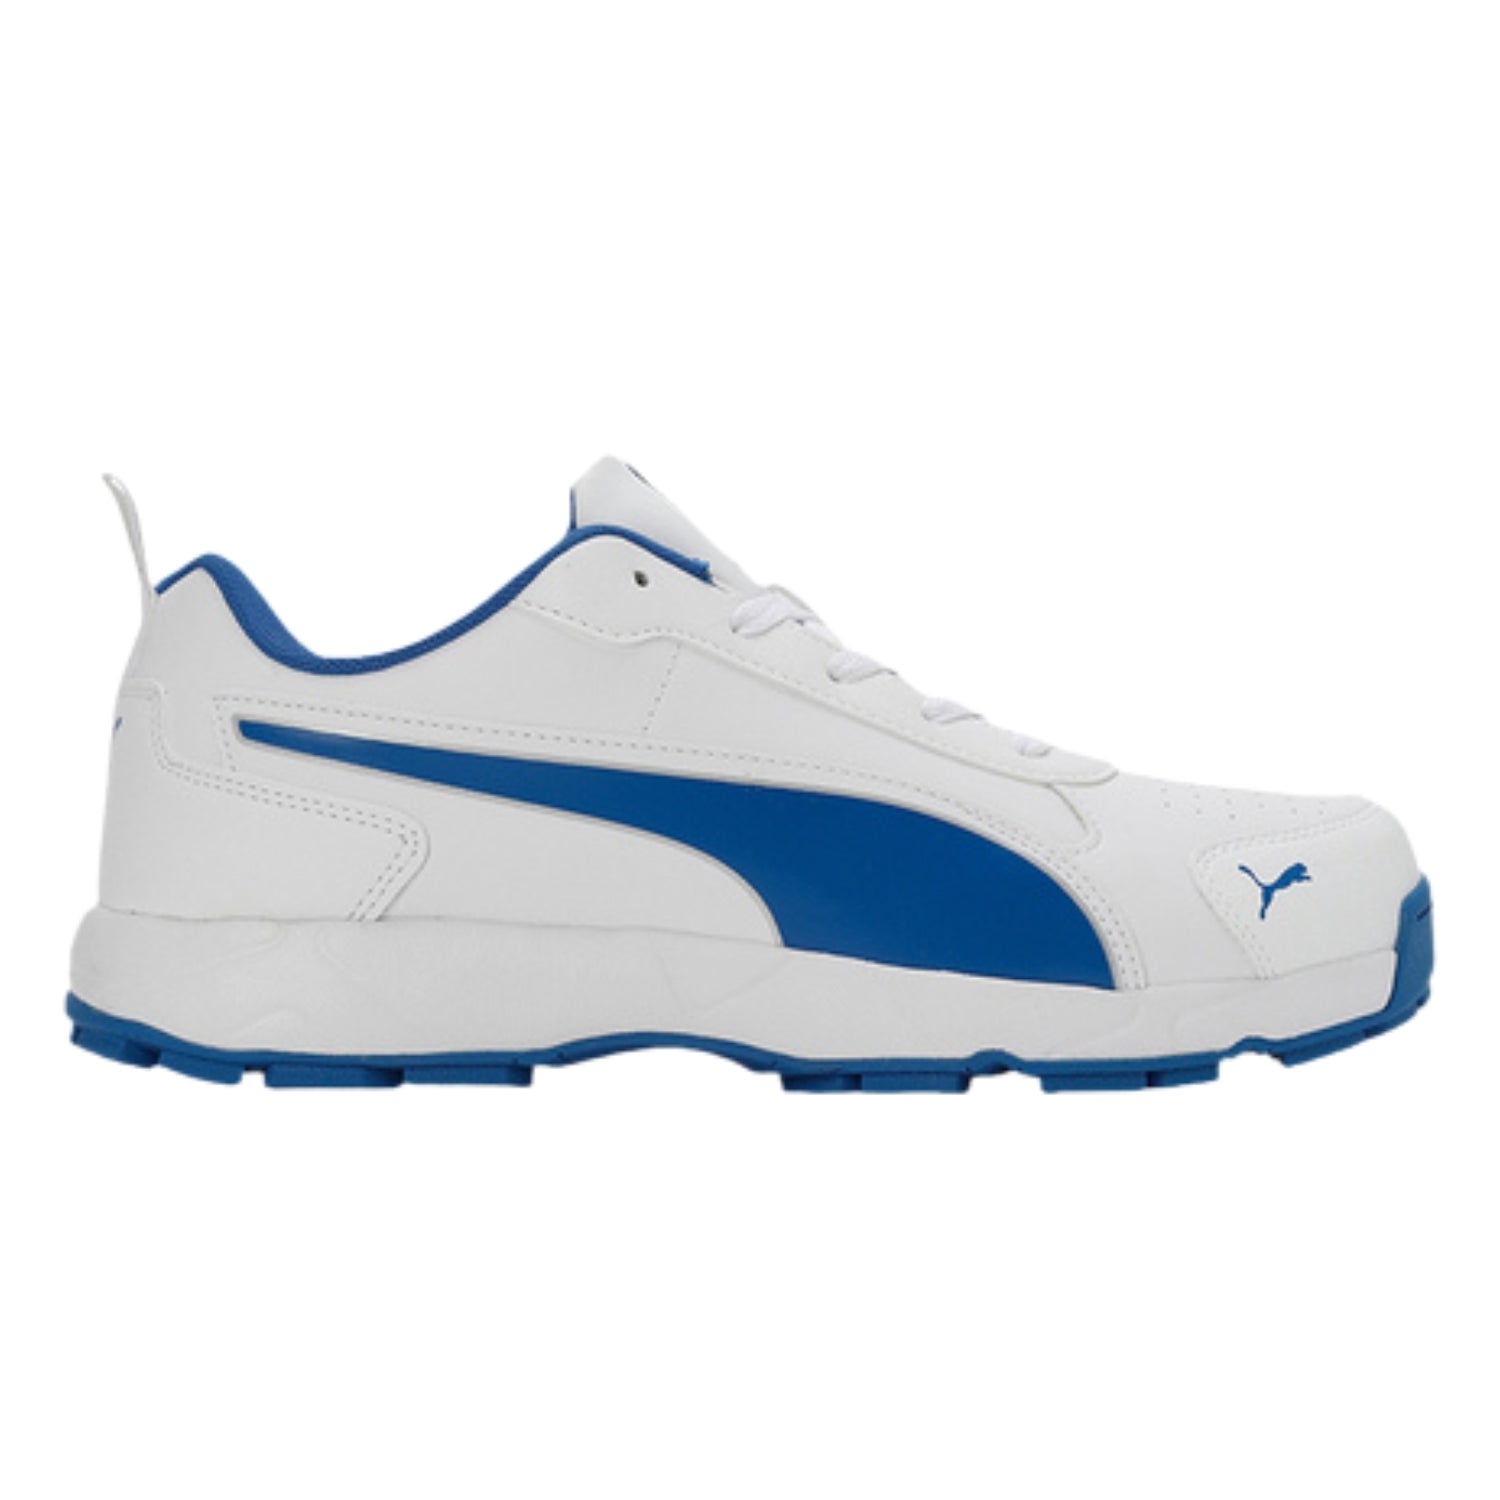 Puma Cricket Shoes, Model Classic Cat, White/Blue